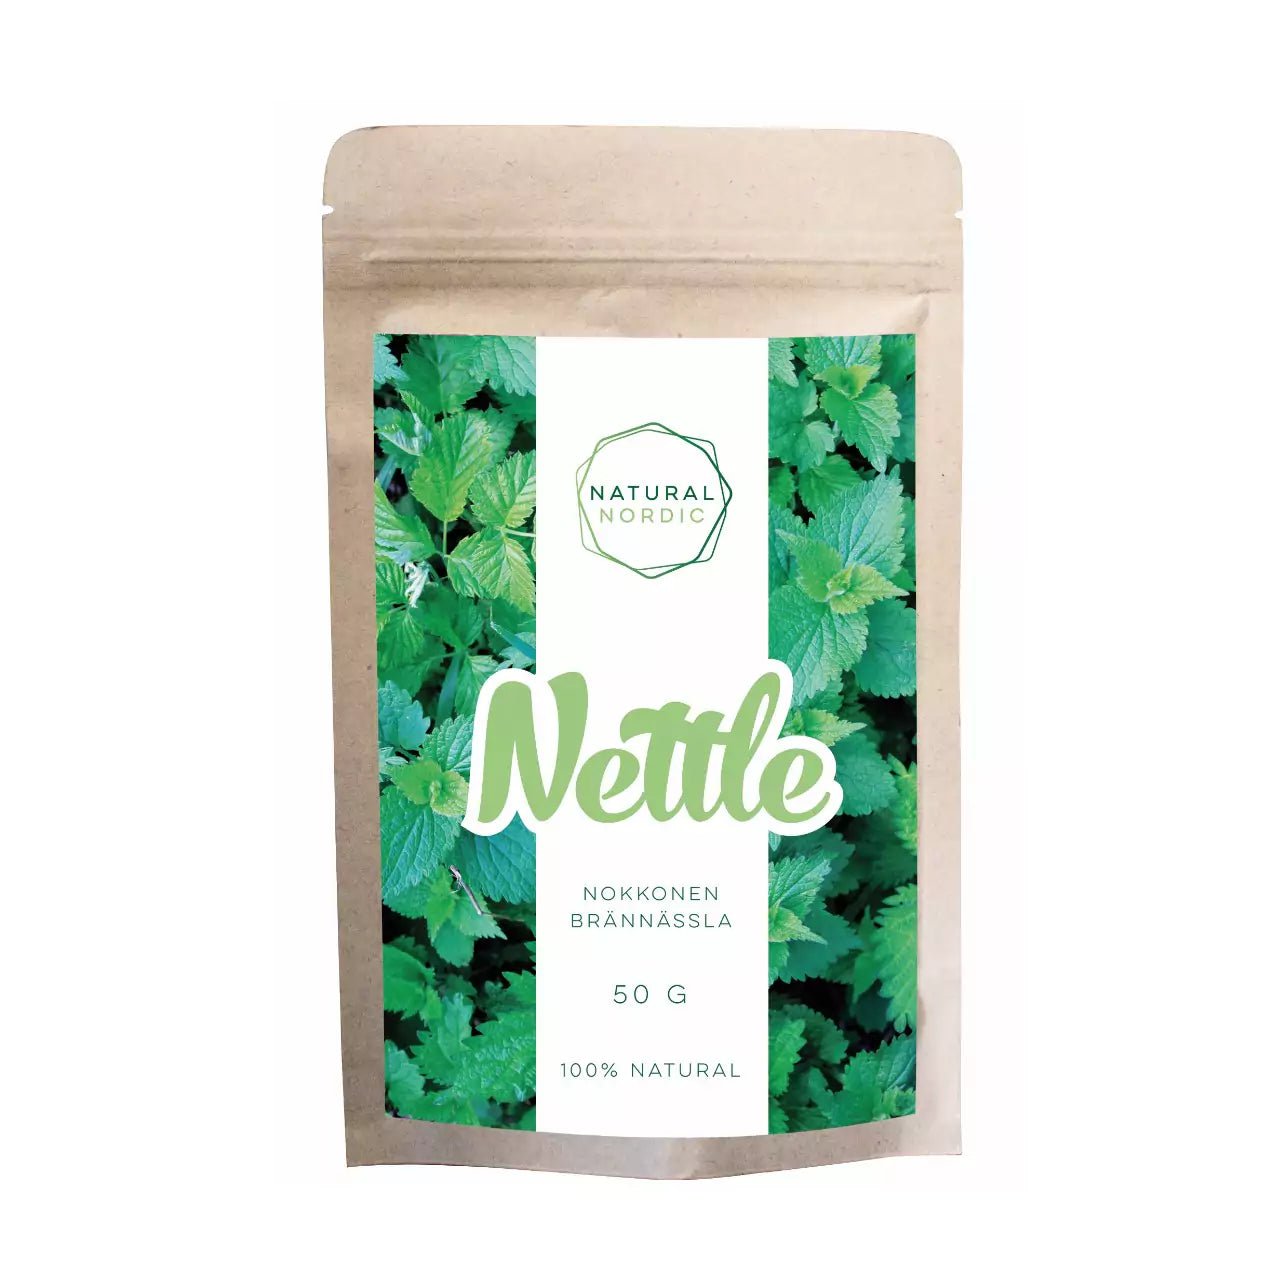 NETTLE - Natural Nordic